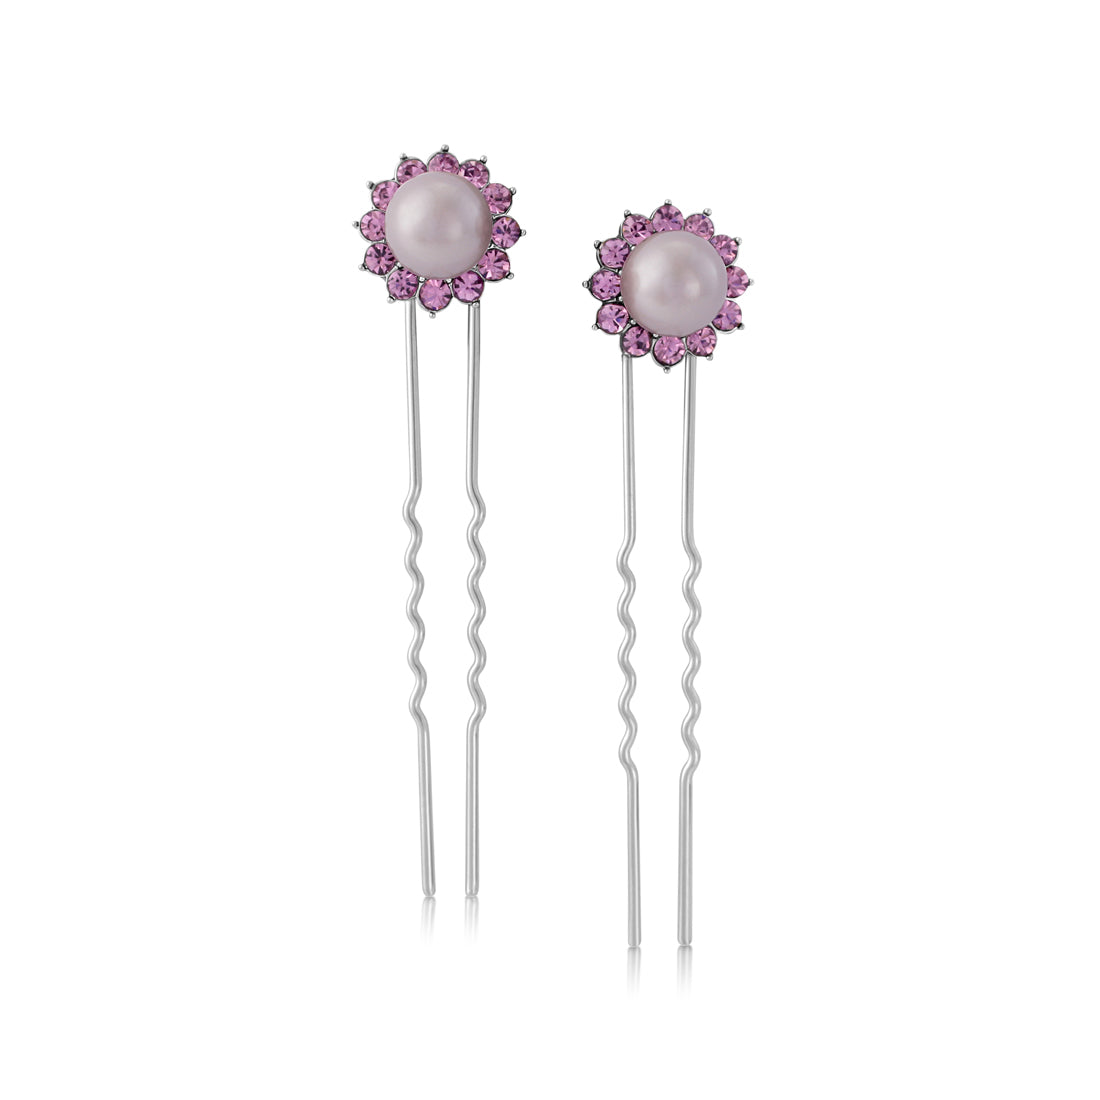 Haze of Amethyst Lilac Pearl Retro Style Hair Pins